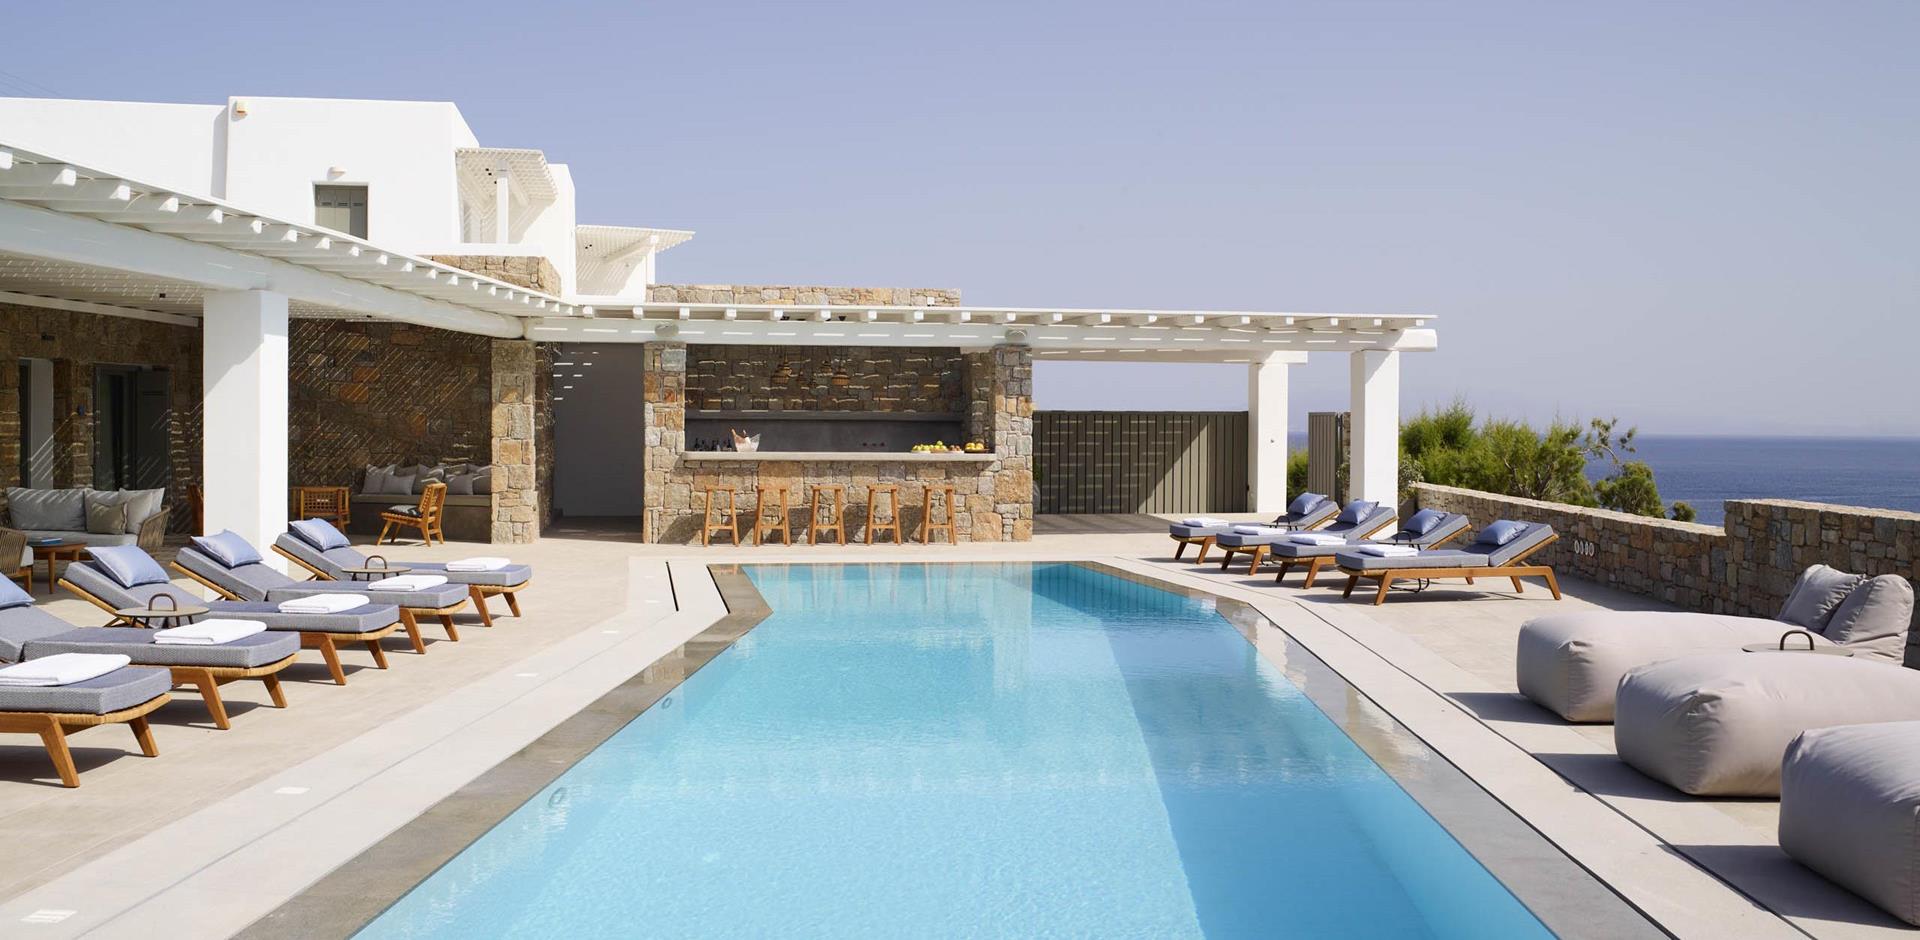 Pool area, Villa Golde, Mykonos, Greece, Europe